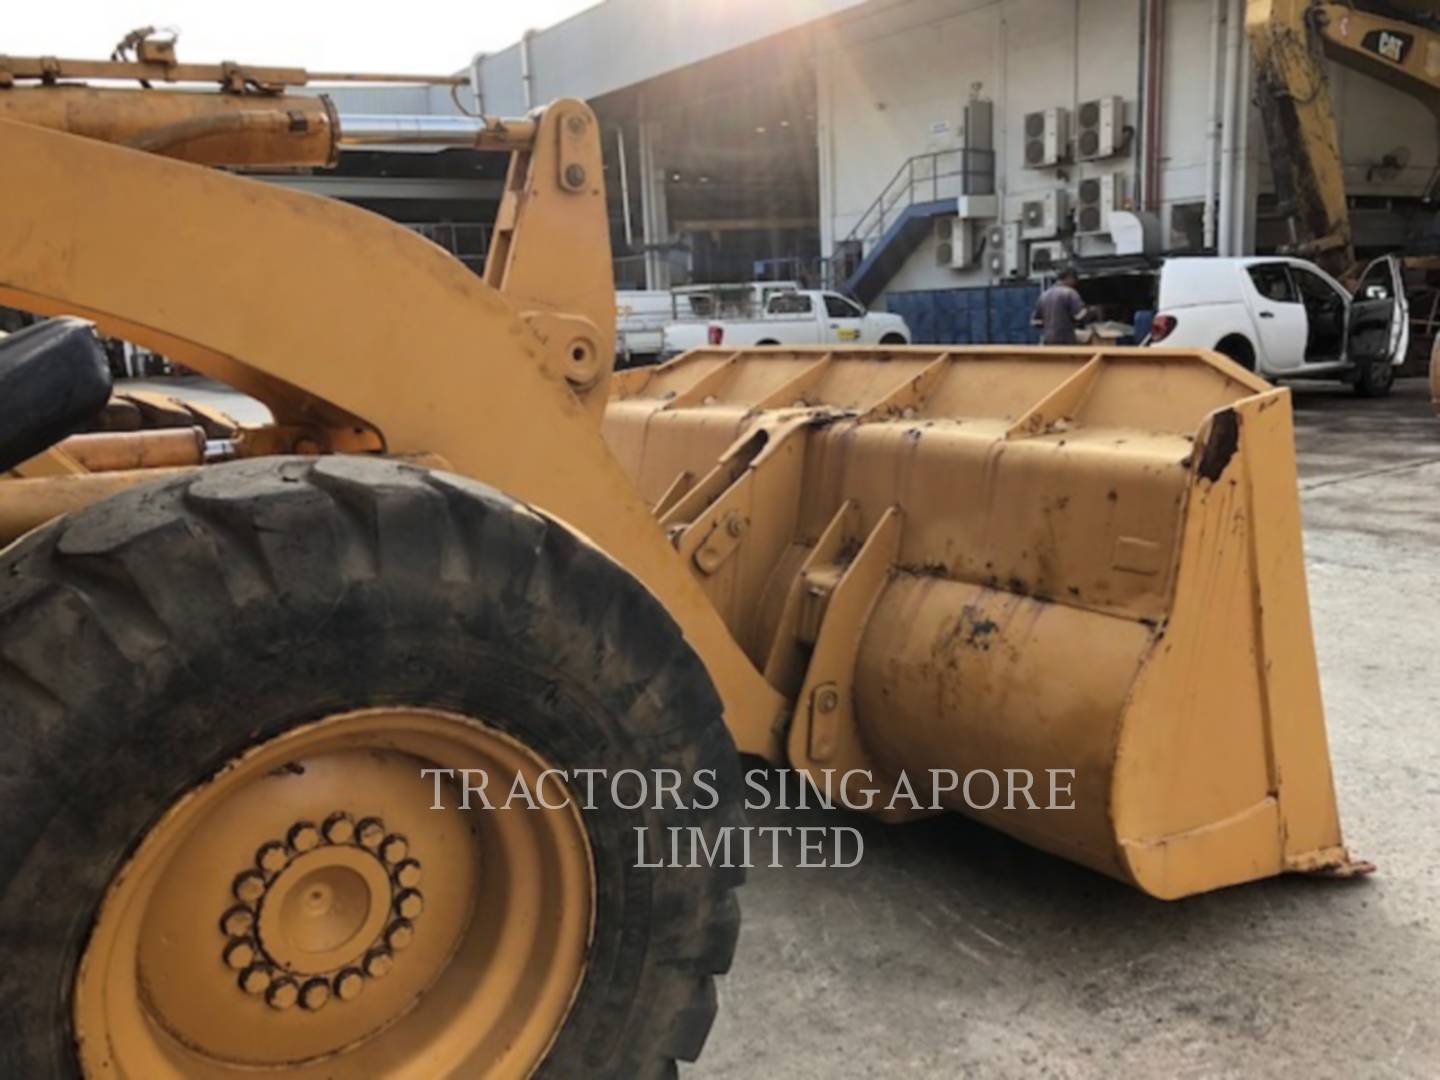 wtk?JHNyYz1lNjM0ZDAyZmIyZmMxZDEzYjg5NzRmOTM5YjRkNzFlNSYkdHh0PVRSQUNUT1JTJTIwU0lOR0FQT1JFJTIwTElNSVRFRCY1NTg5NQ== 924GZ | Tractors Singapore